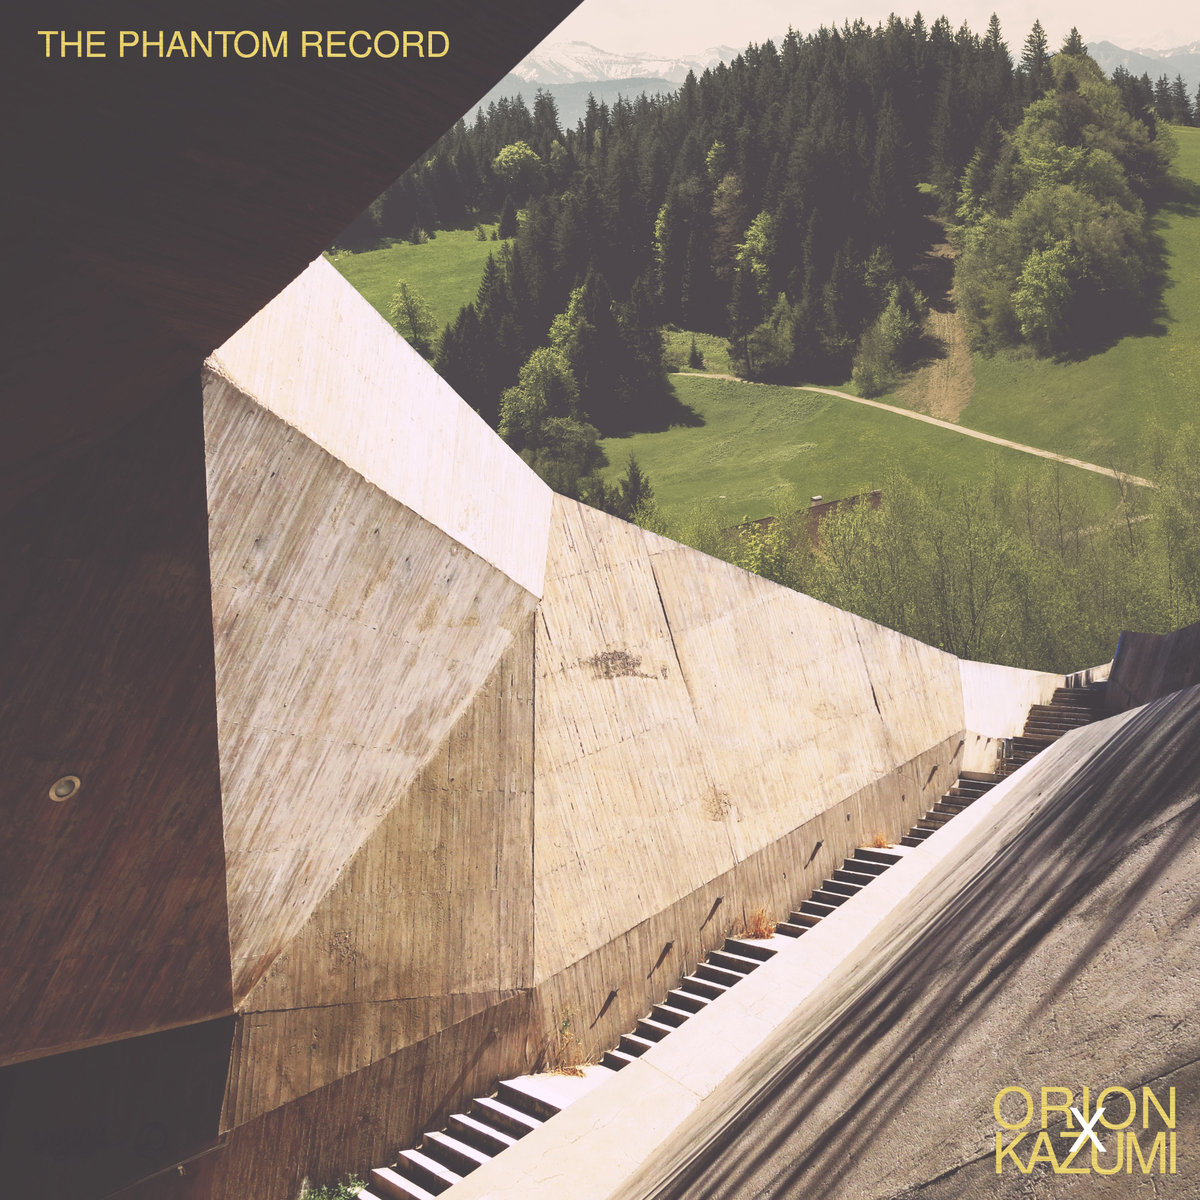 Orion & Kazumi – The Phantom Record EP